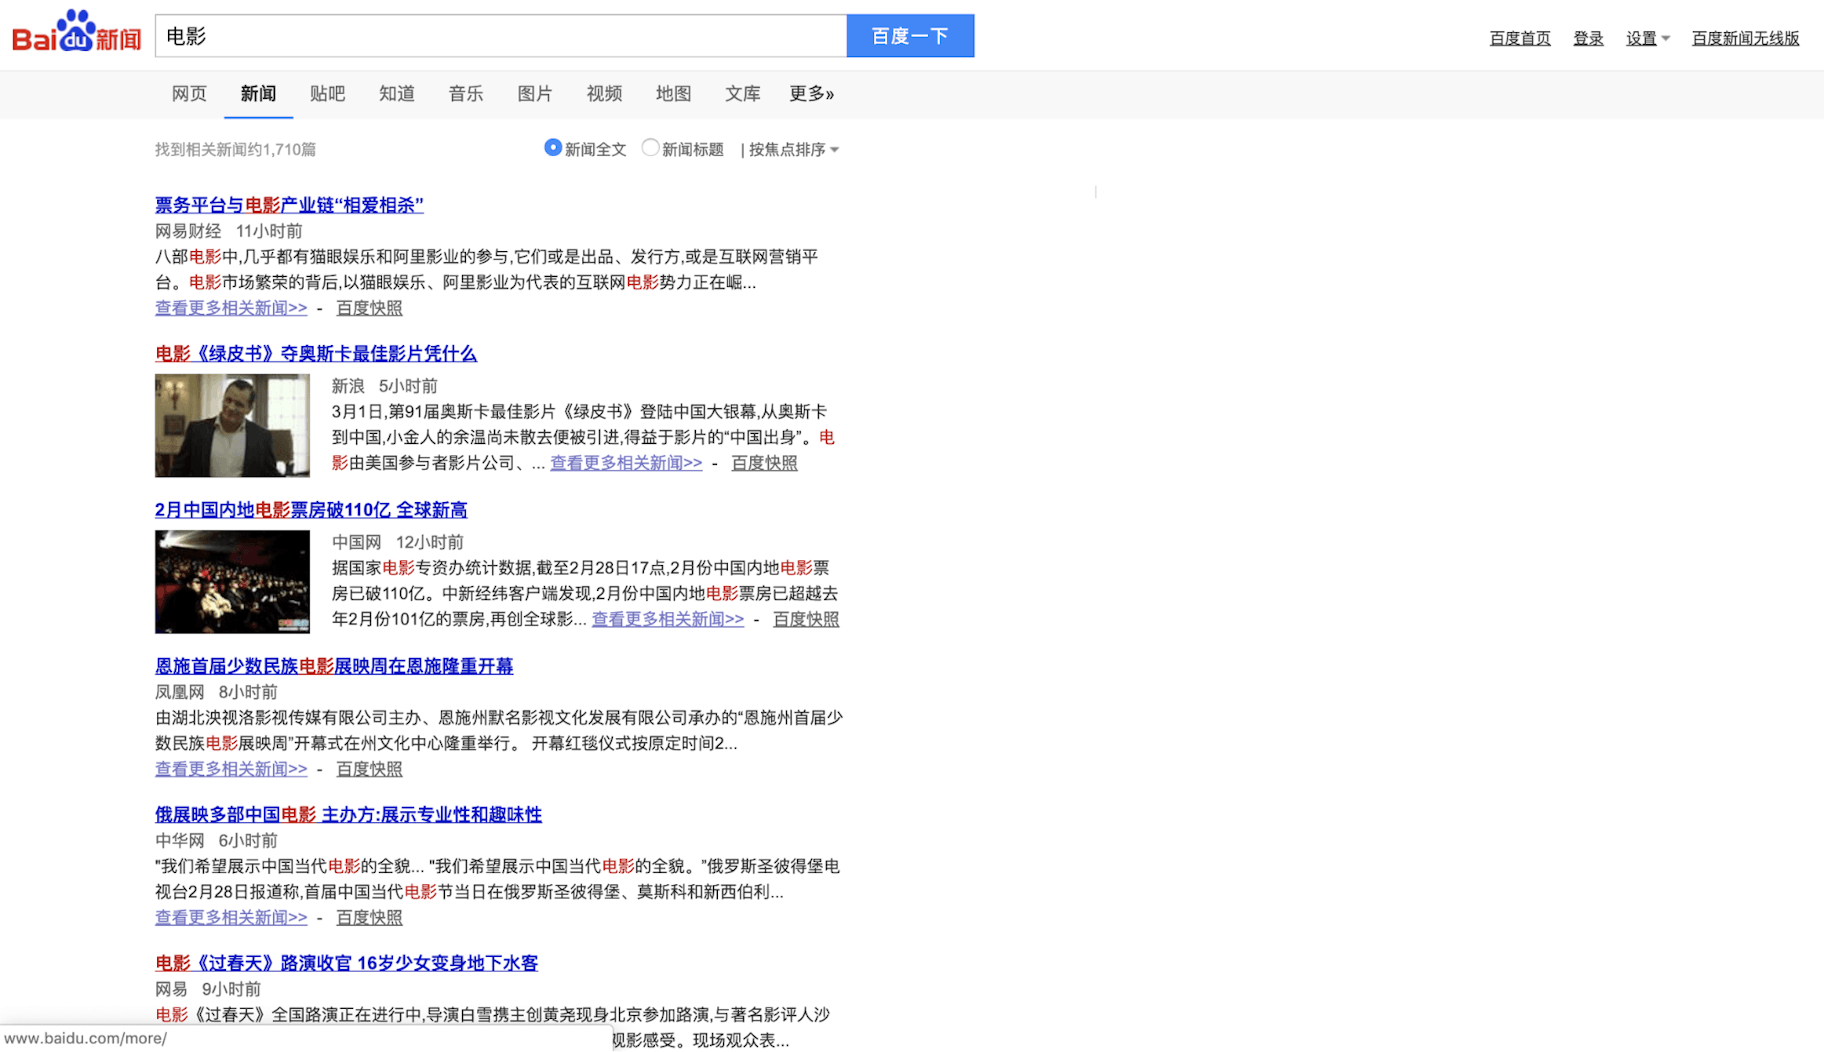 Baidu Search Engine